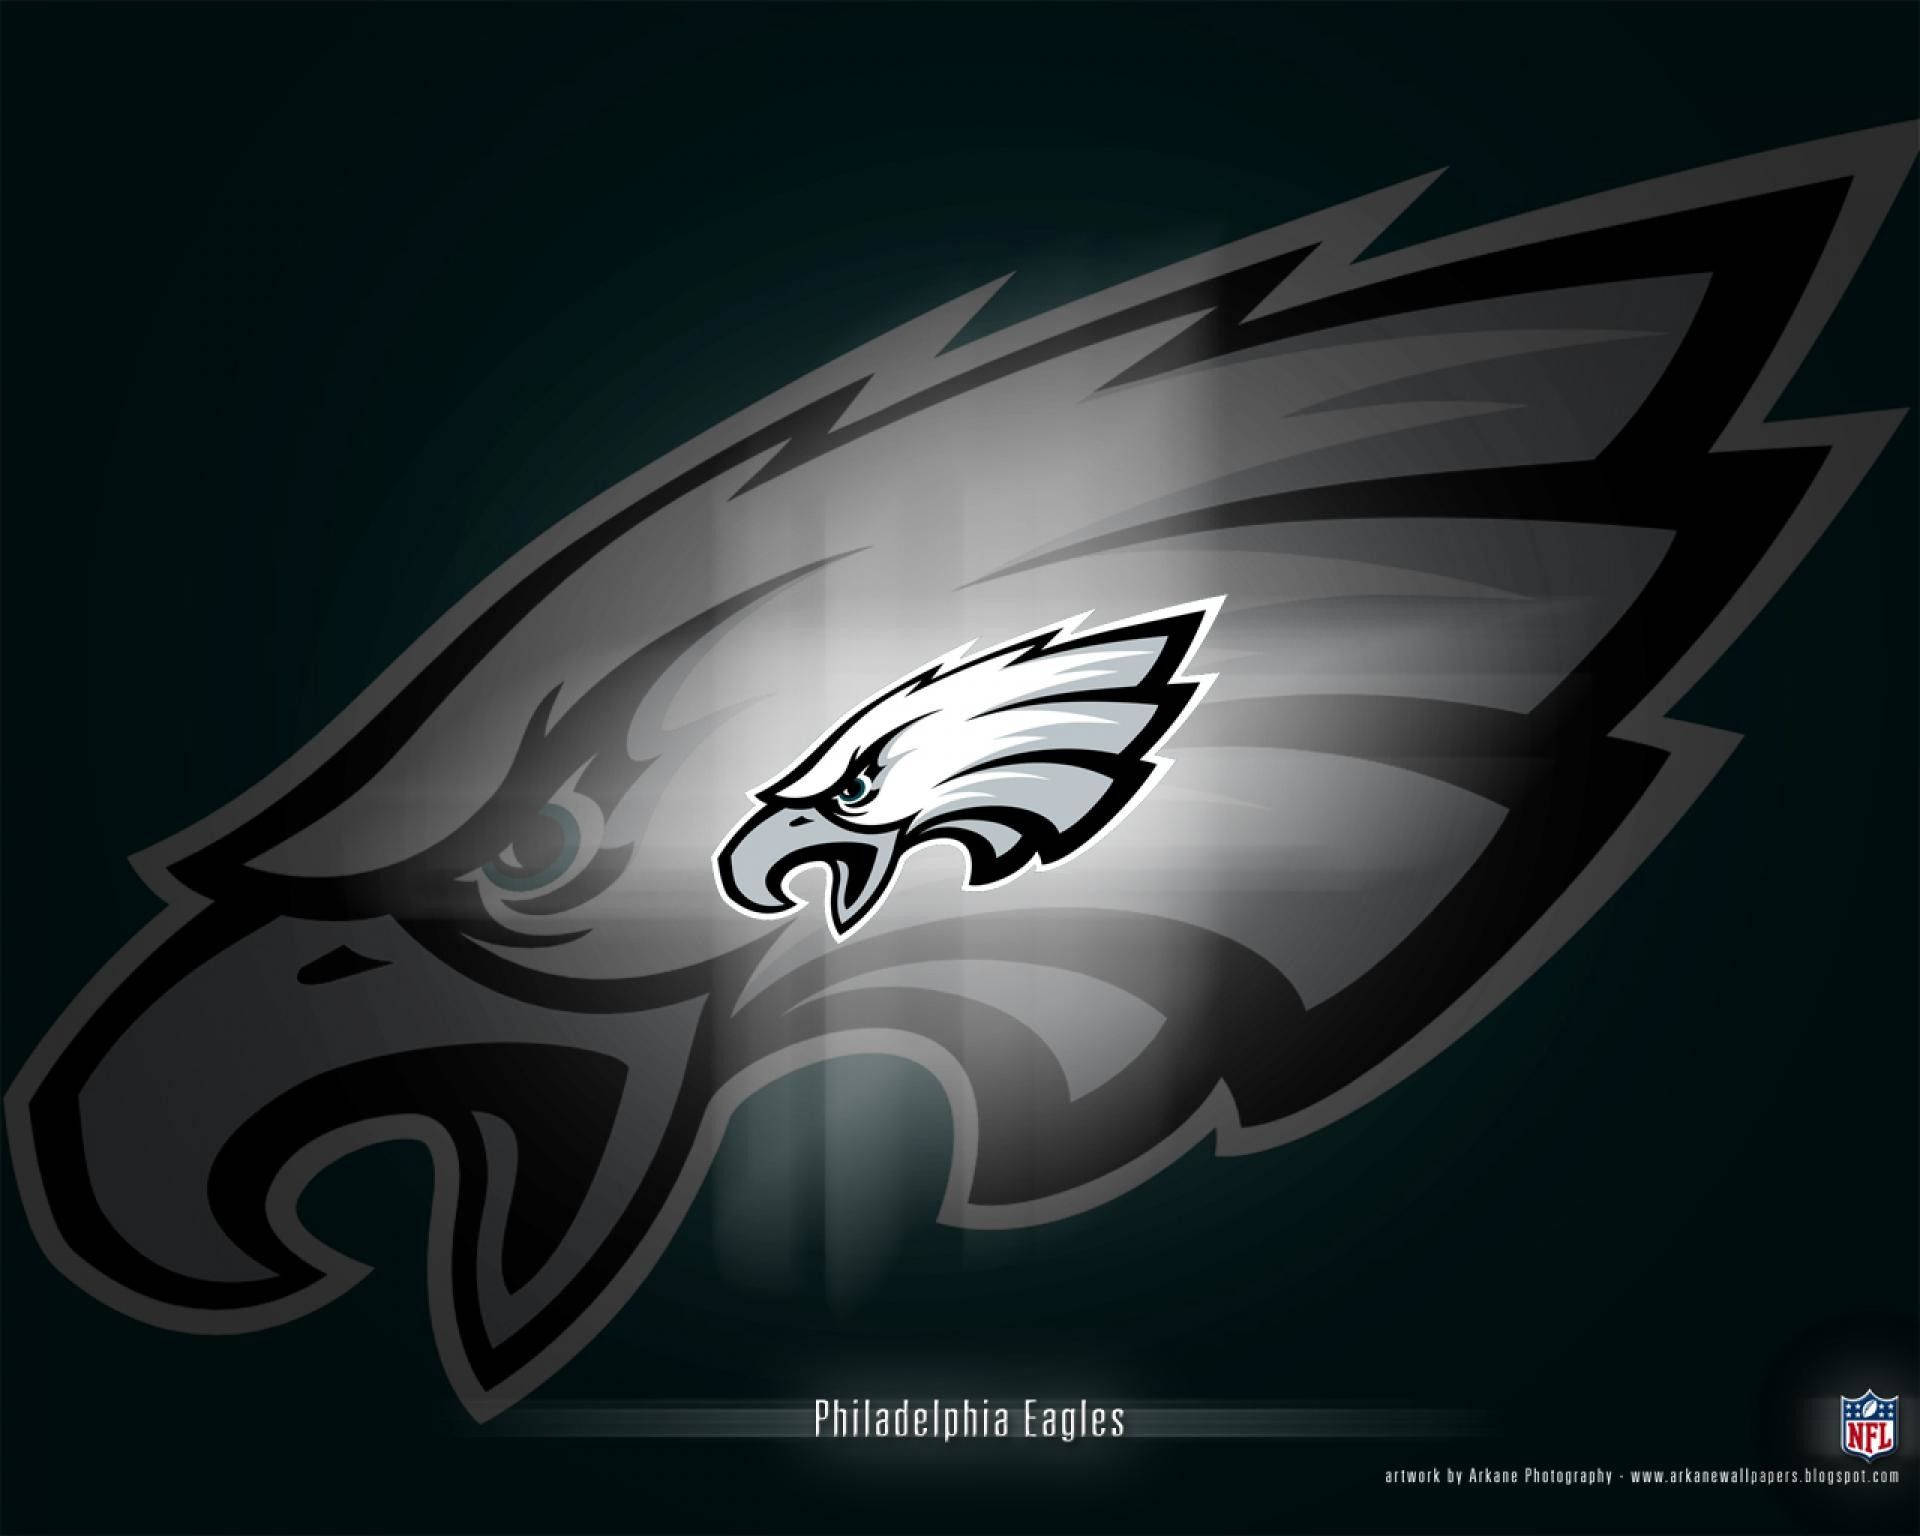 200+] Philadelphia Eagles Wallpapers